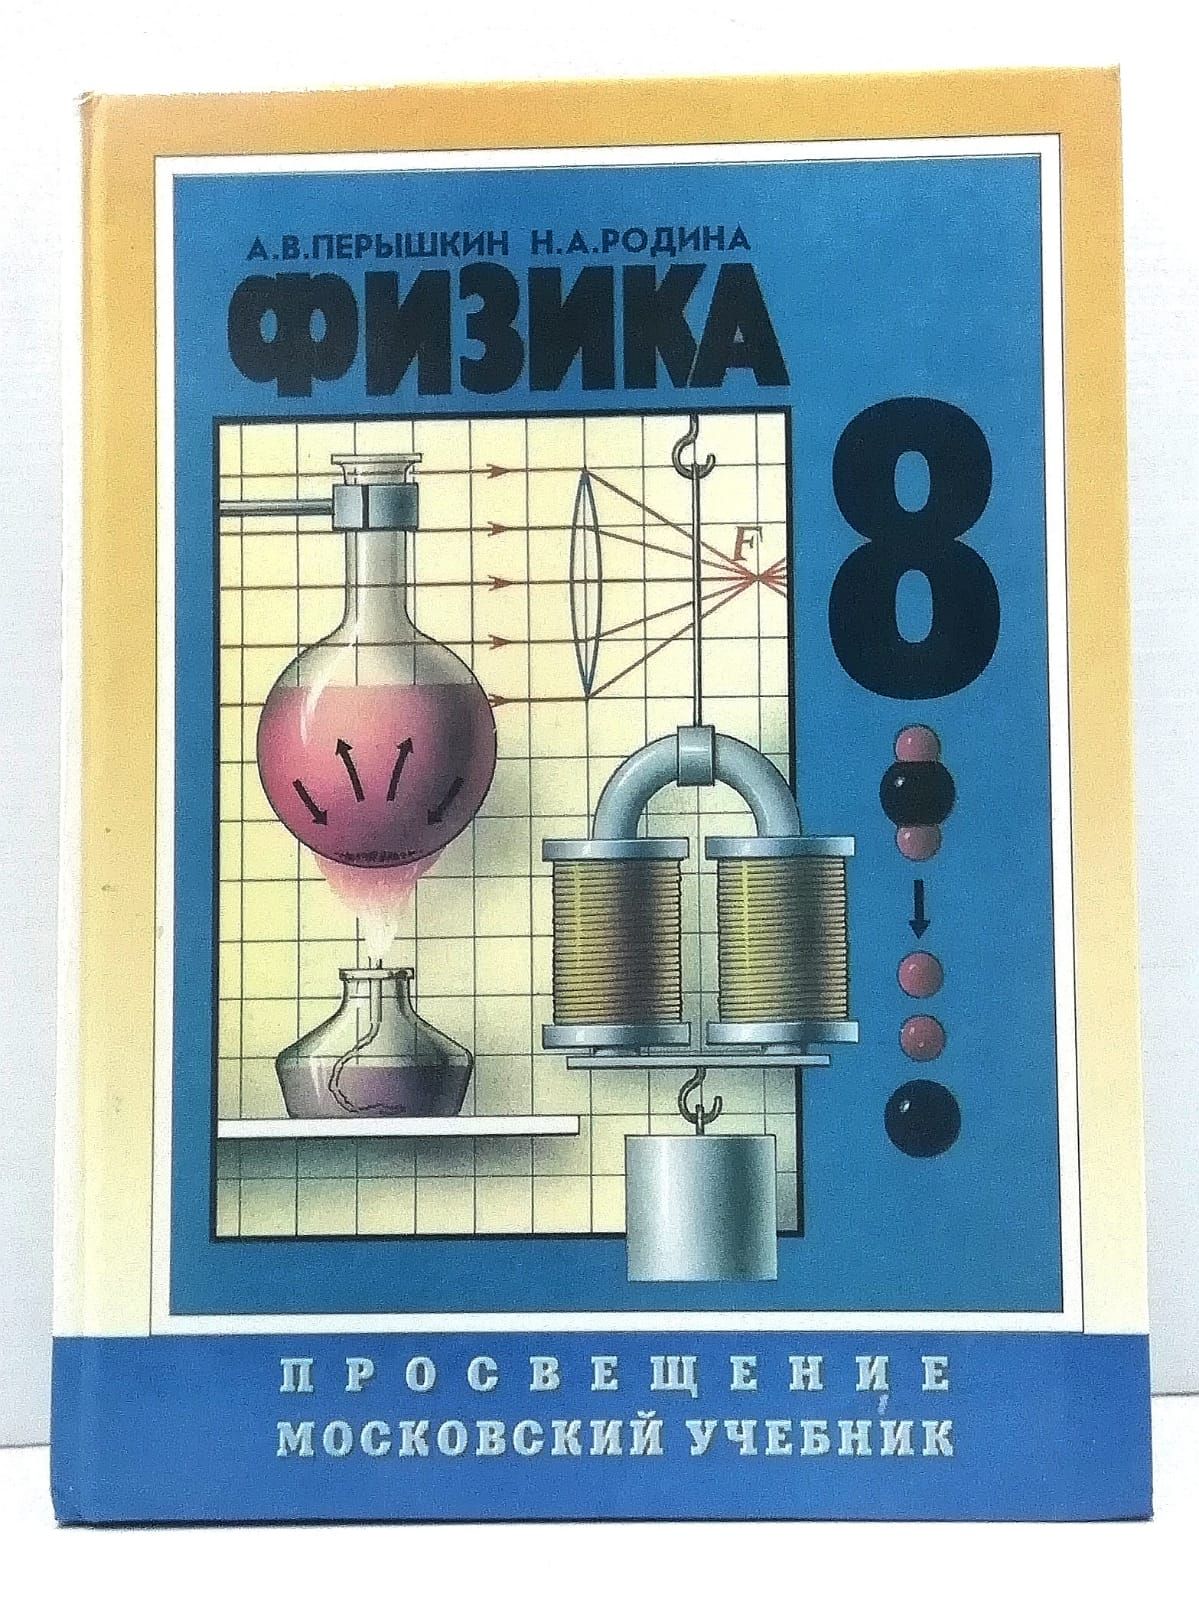 Сайт физика 8 класс. Книги по физике. Учебник физики 8 класс. Старый учебник физики. Советские учебники по физики.